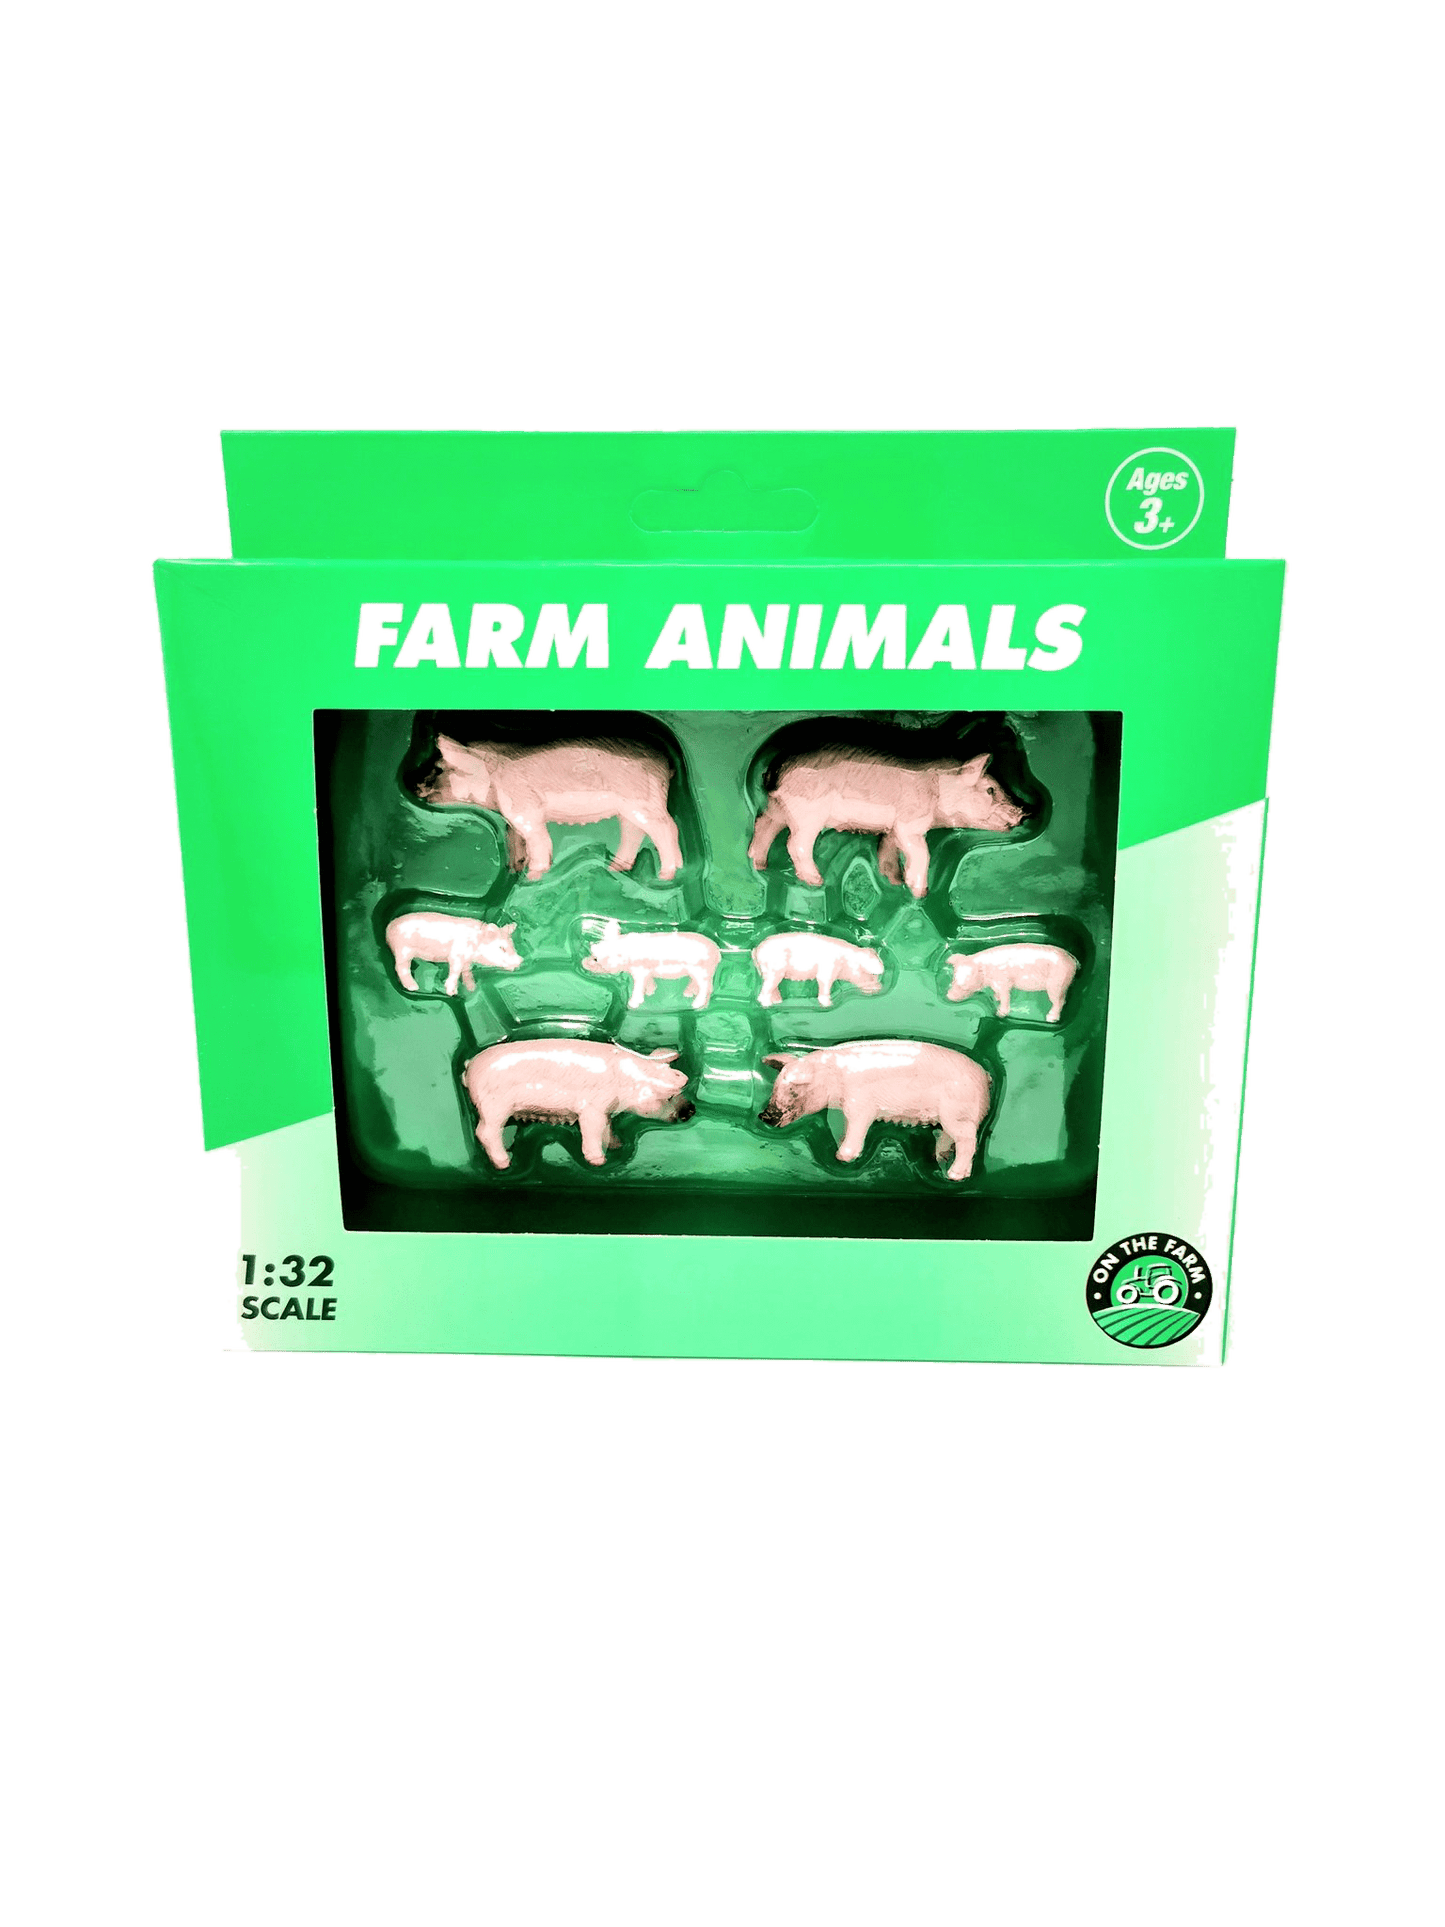 Farm Animals - Pig and Piglets 8pk